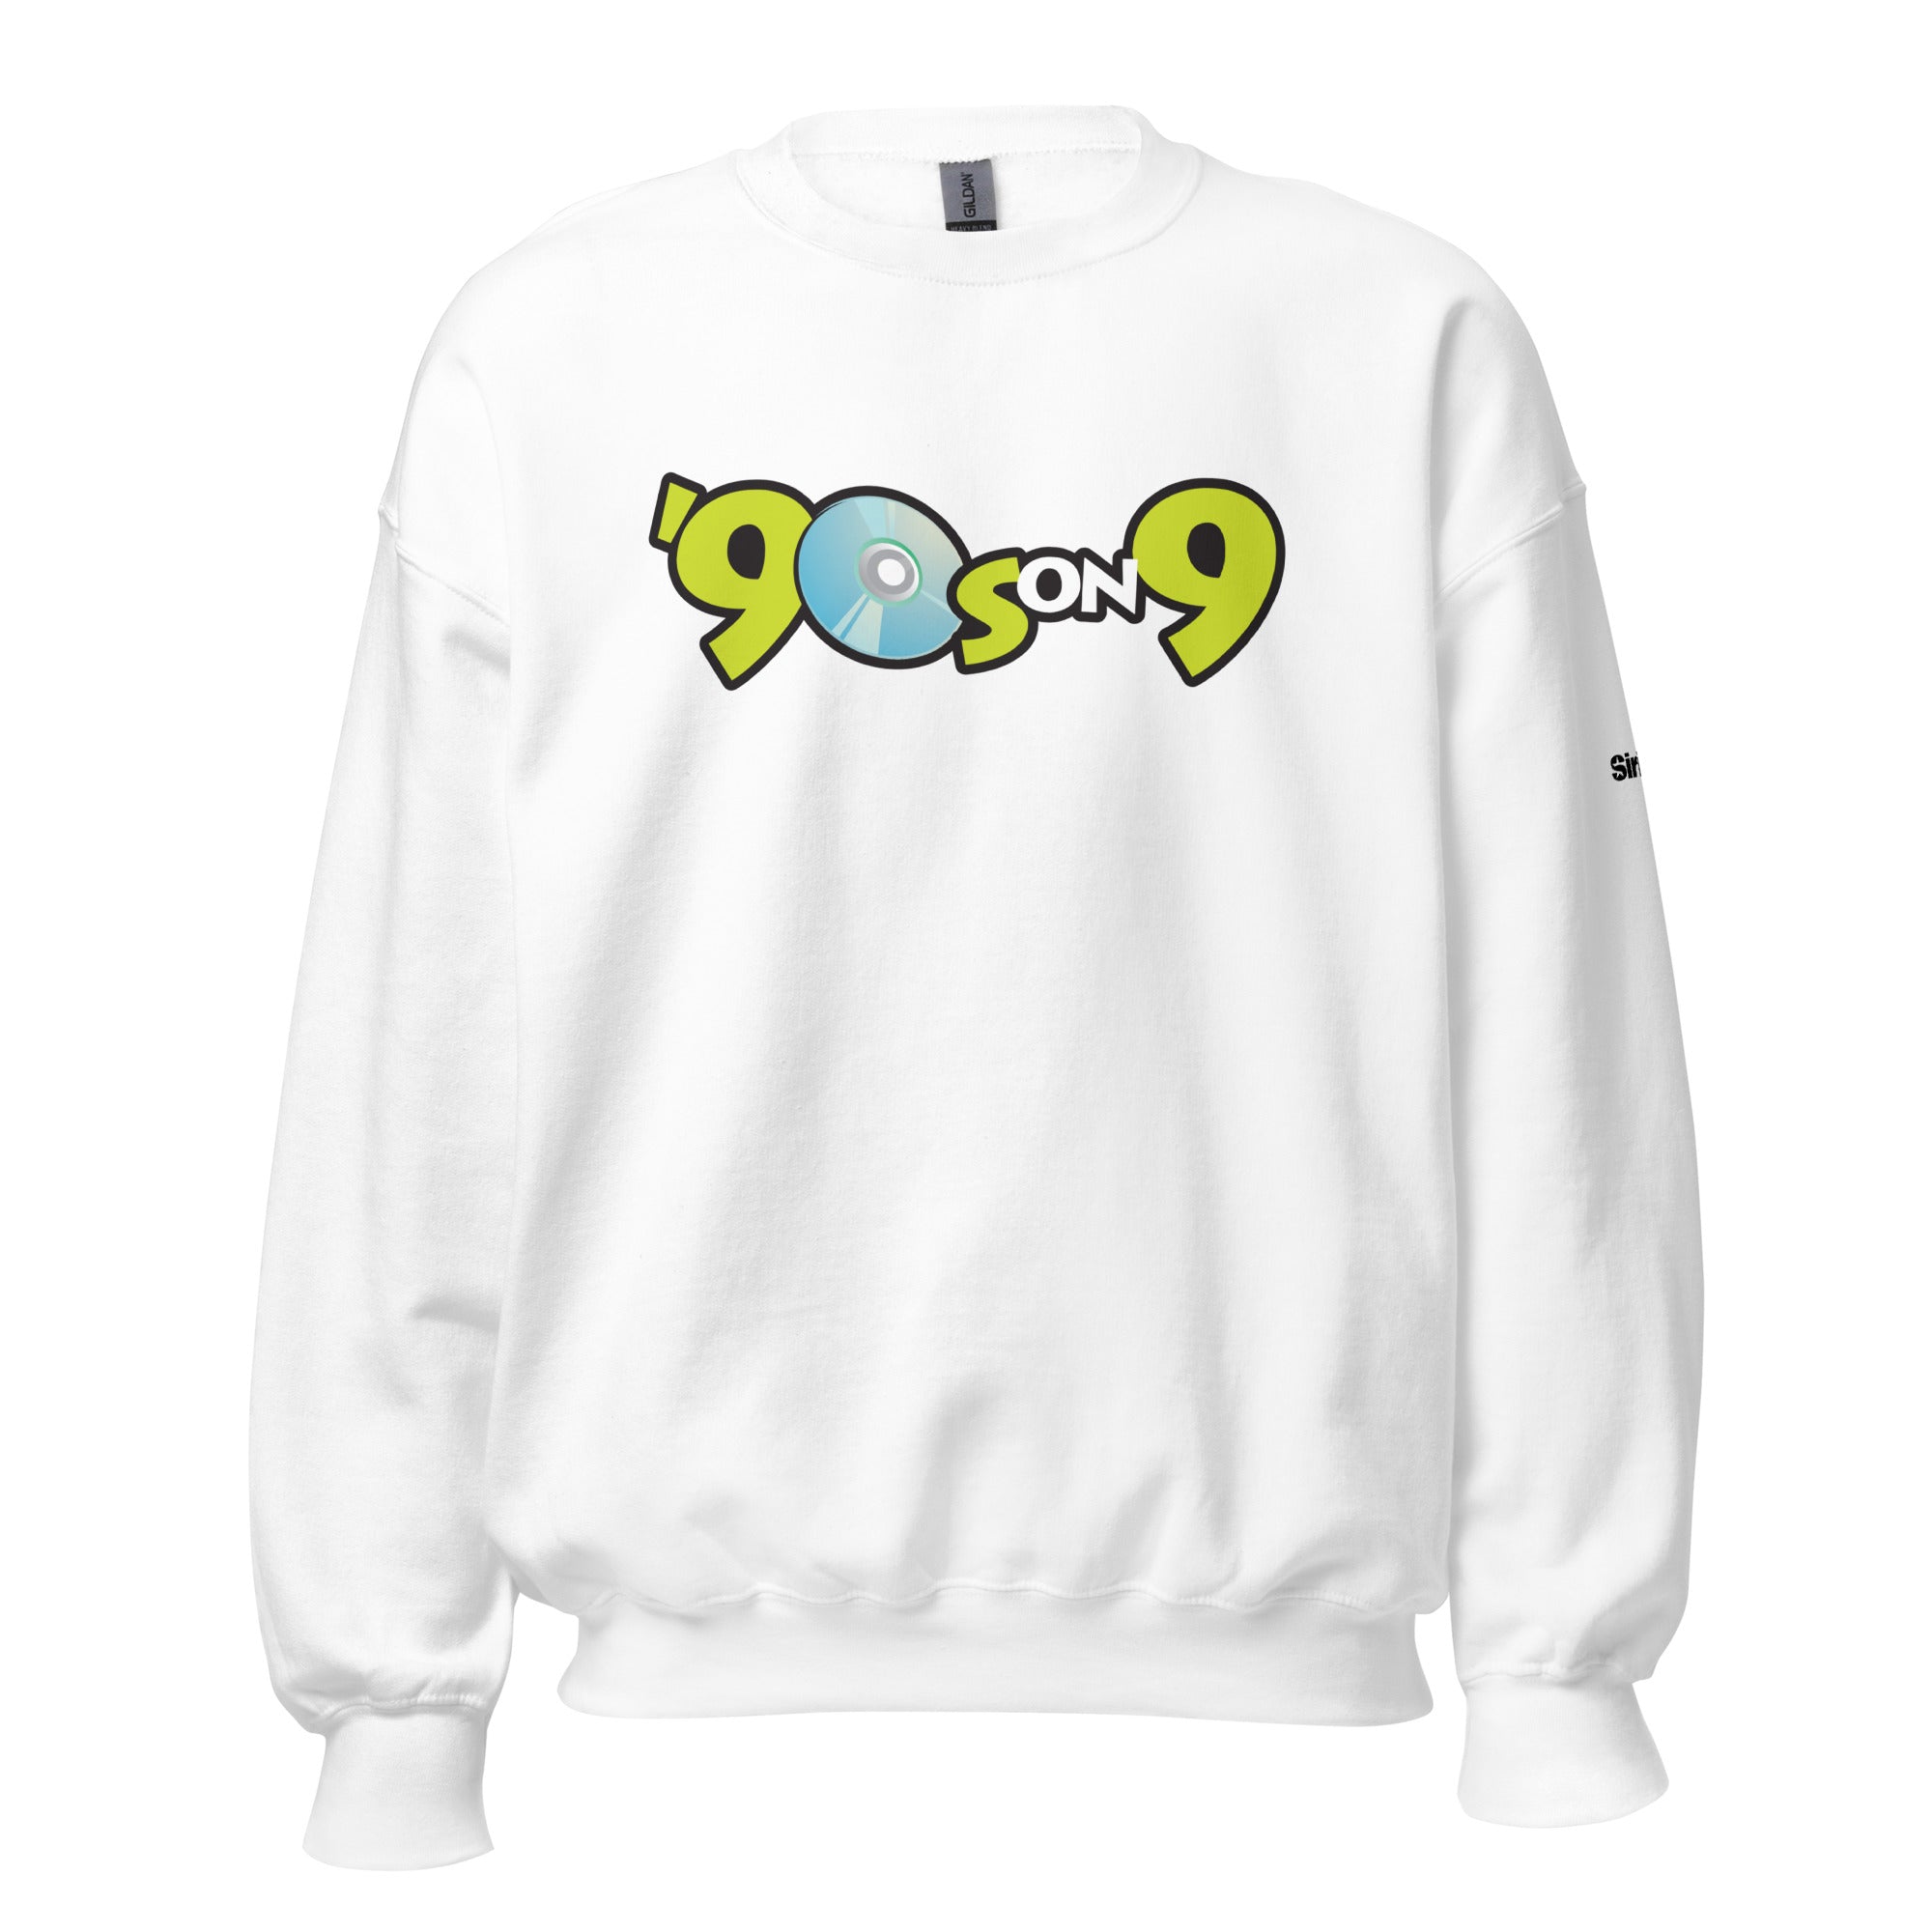 90s on 9: Sweatshirt (White)